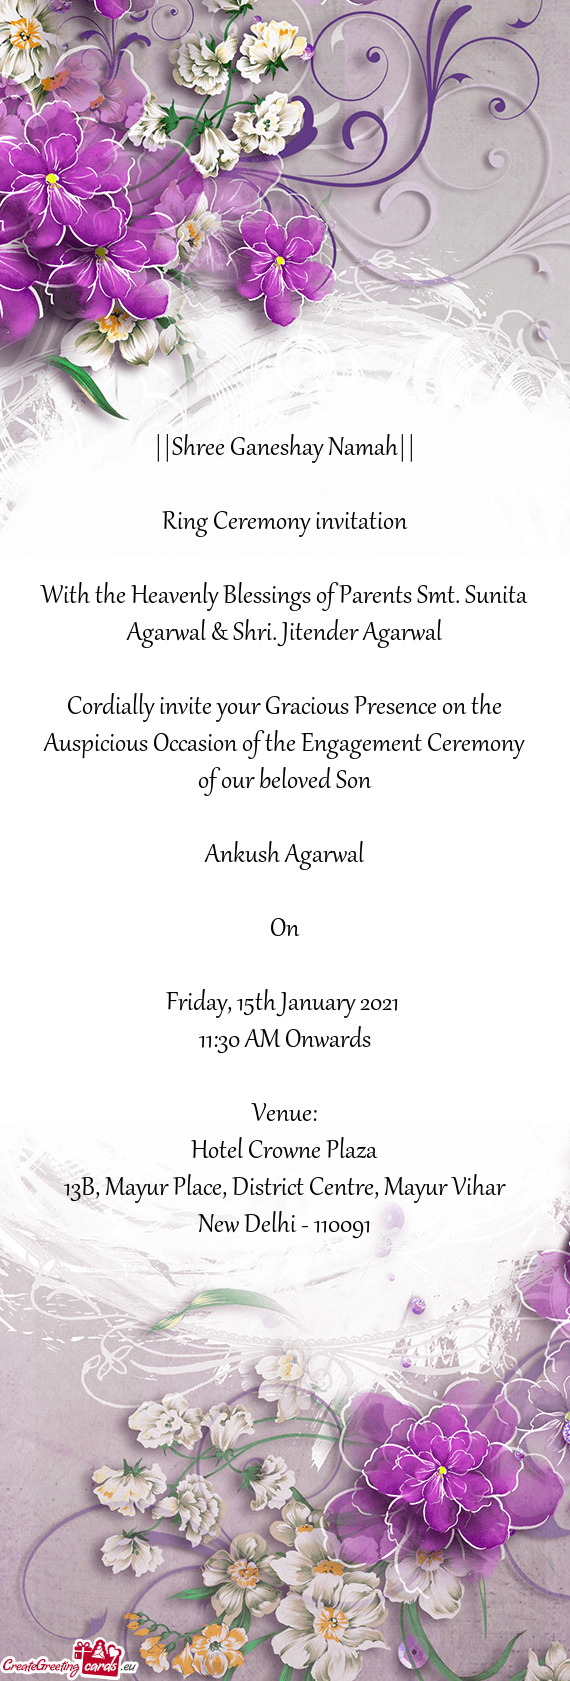 With the Heavenly Blessings of Parents Smt. Sunita Agarwal & Shri. Jitender Agarwal